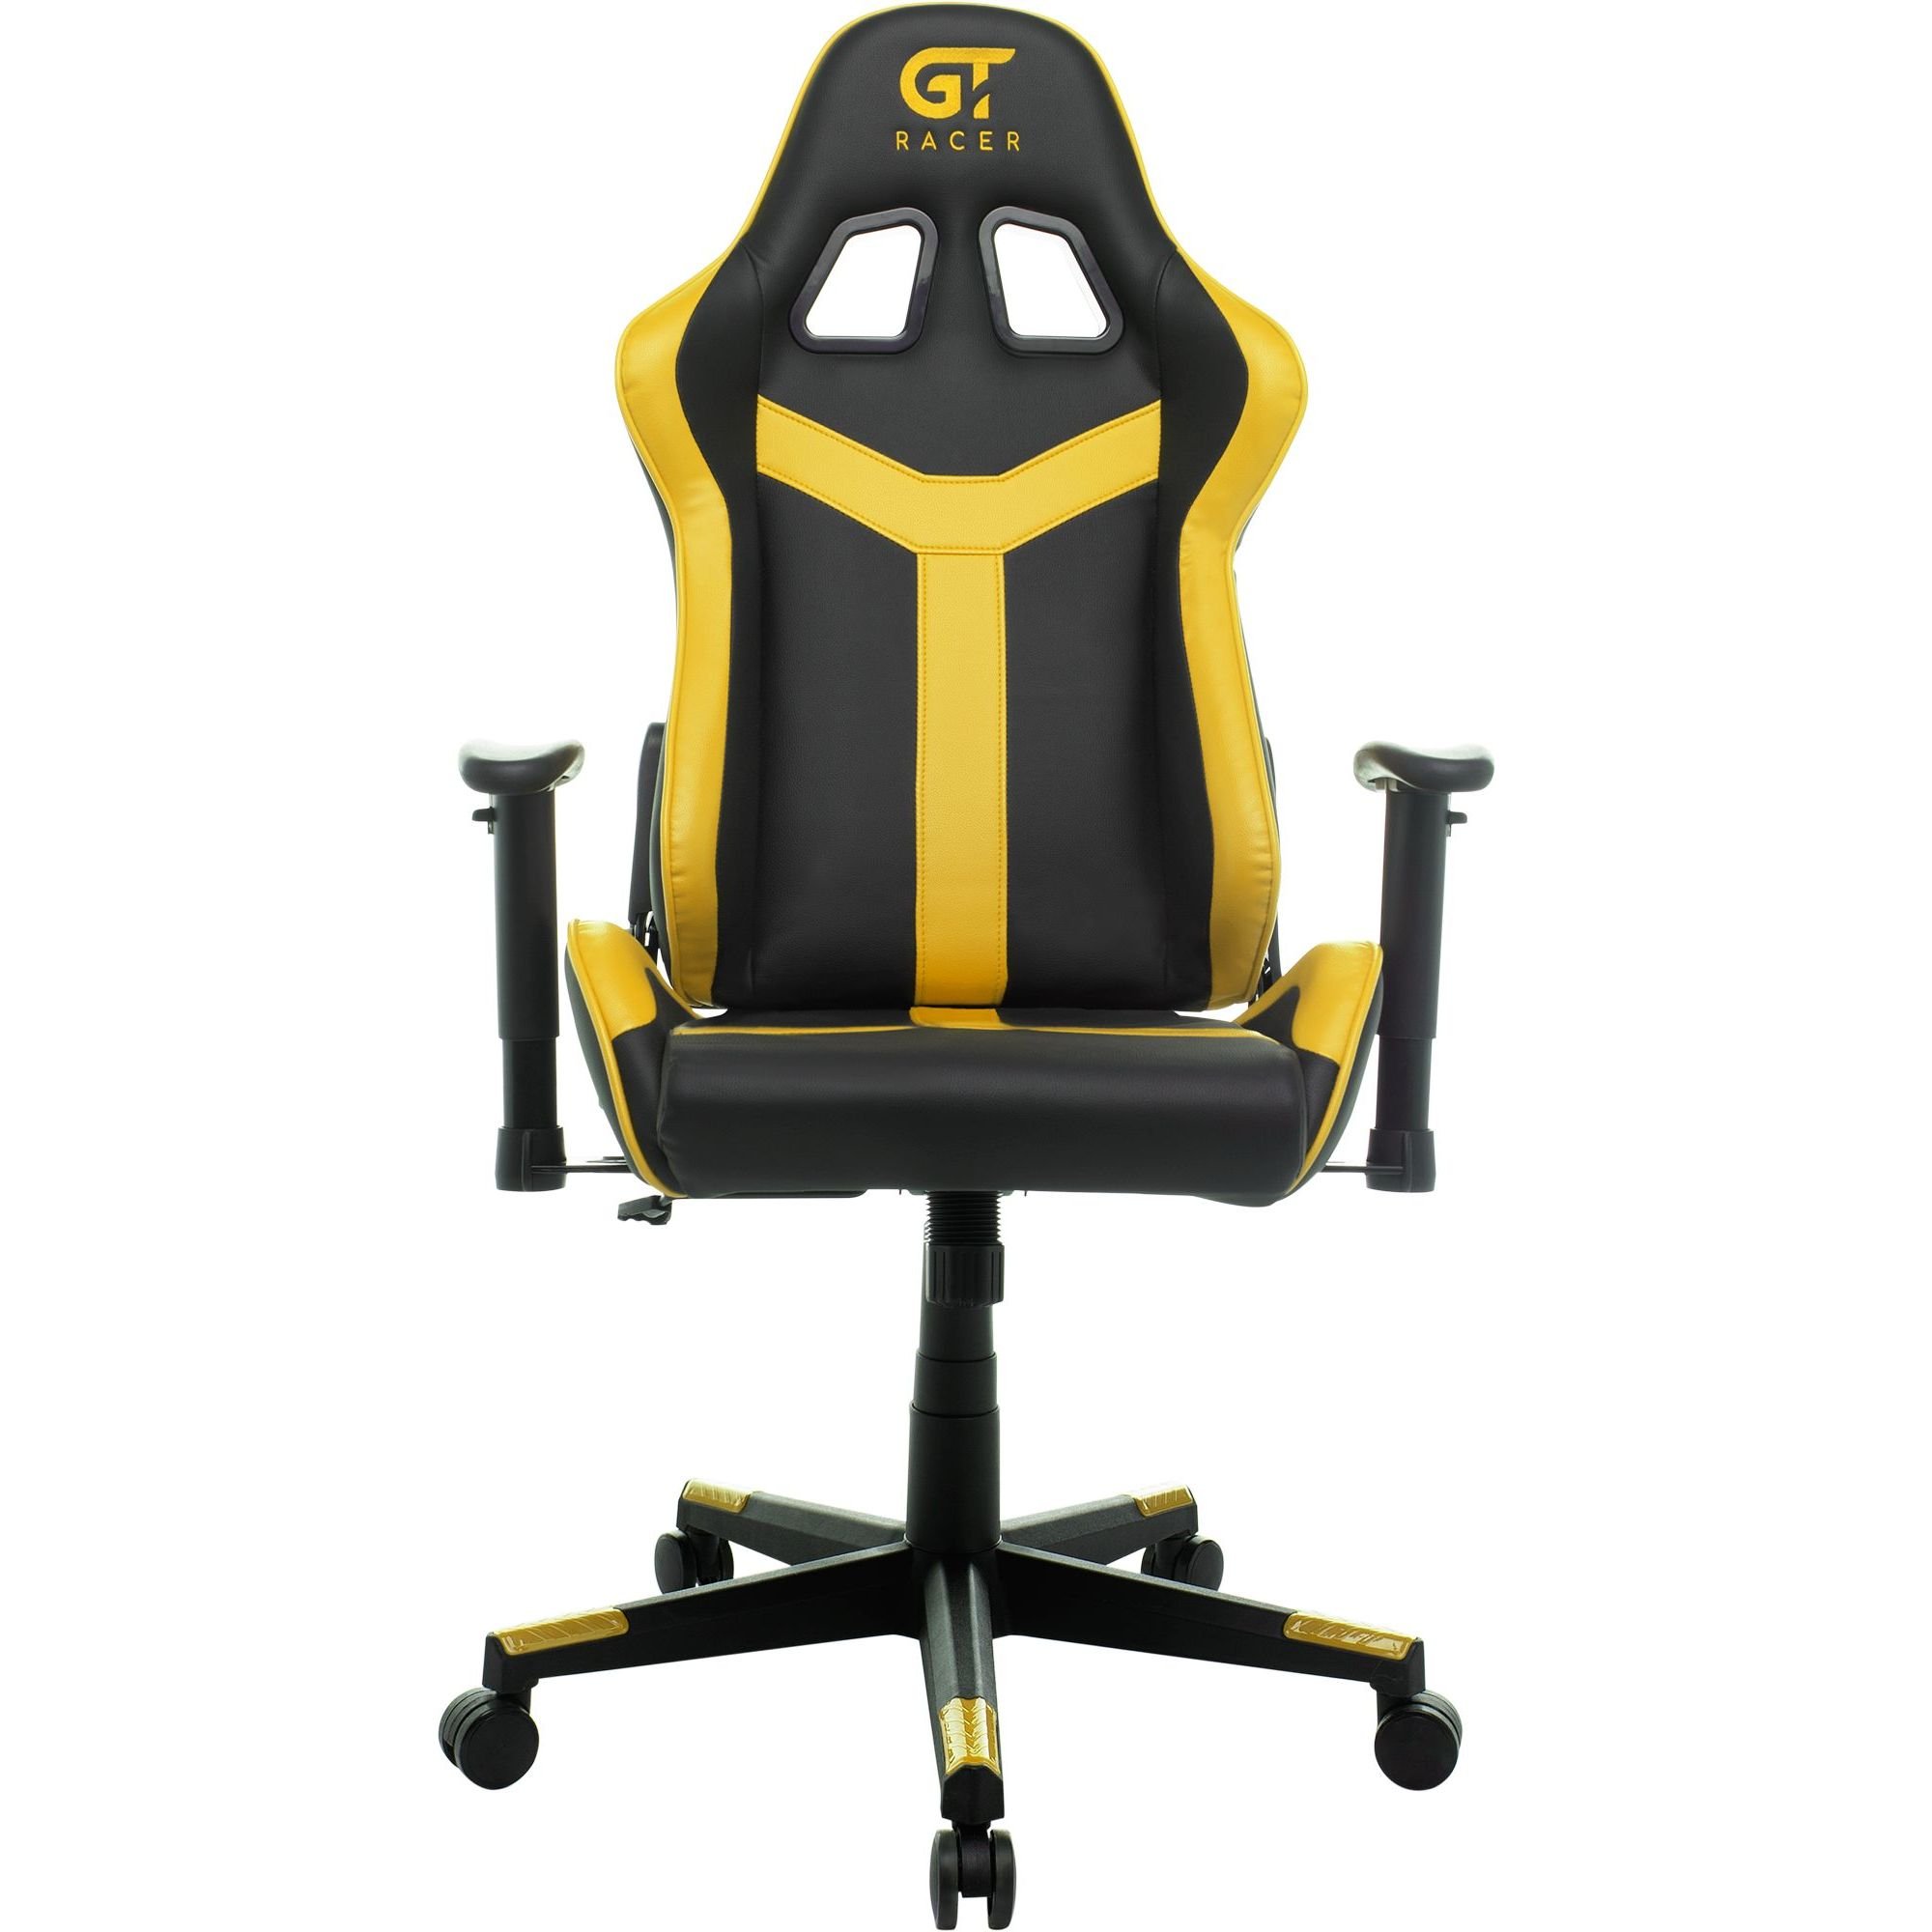 Геймерське крісло GT Racer чорне з жовтим (X-2527 Black/Yellow) - фото 1